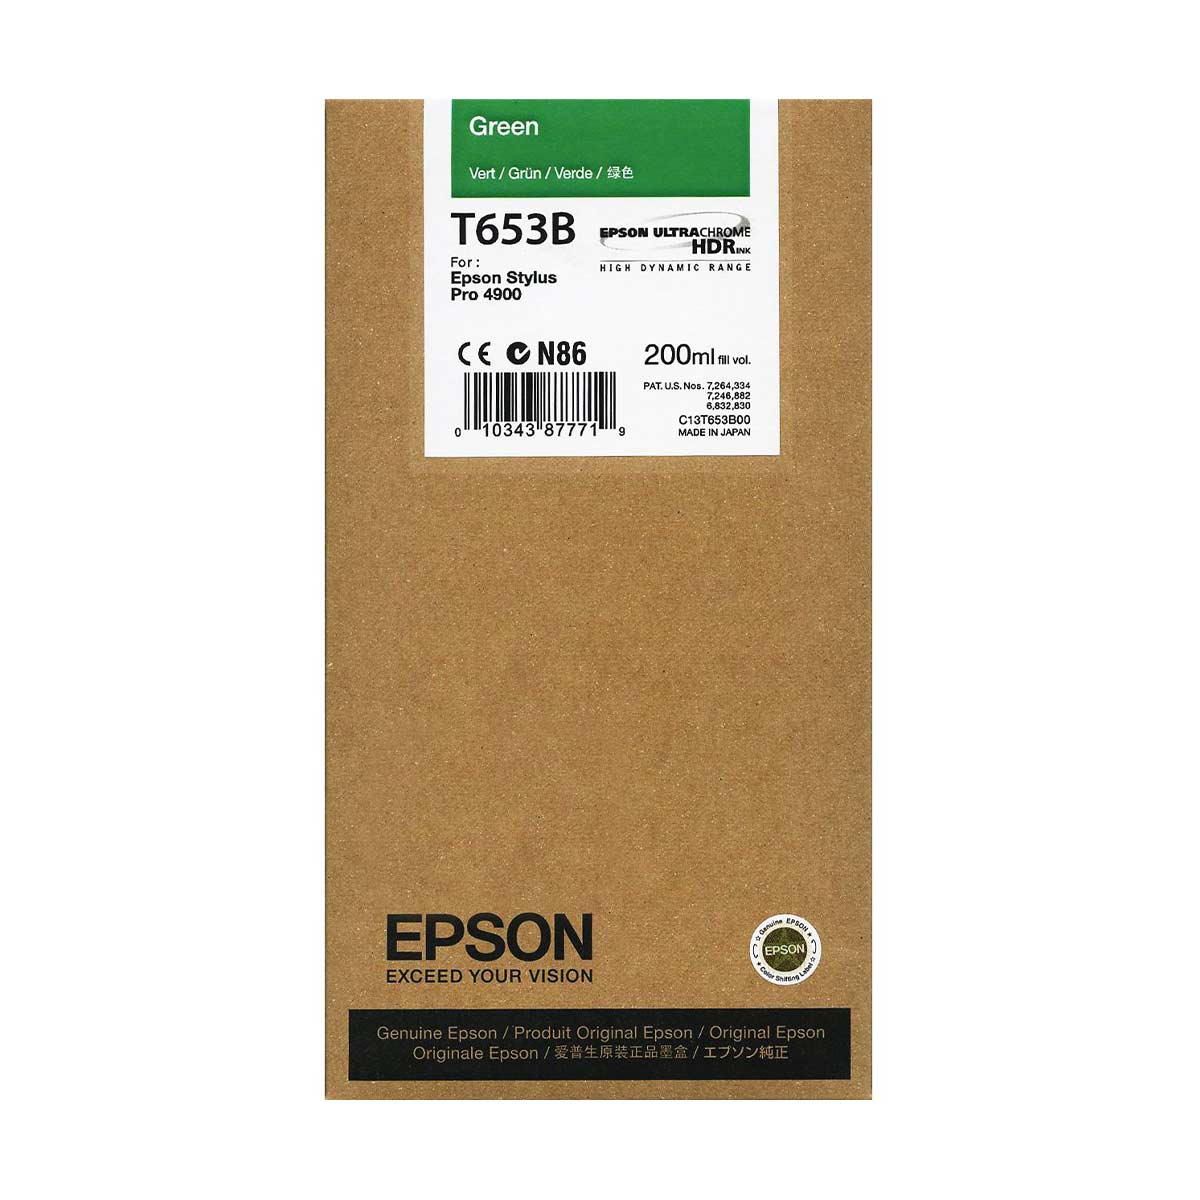 Epson T653B 4900 Ultrachrome Ink HDR 200ml Green